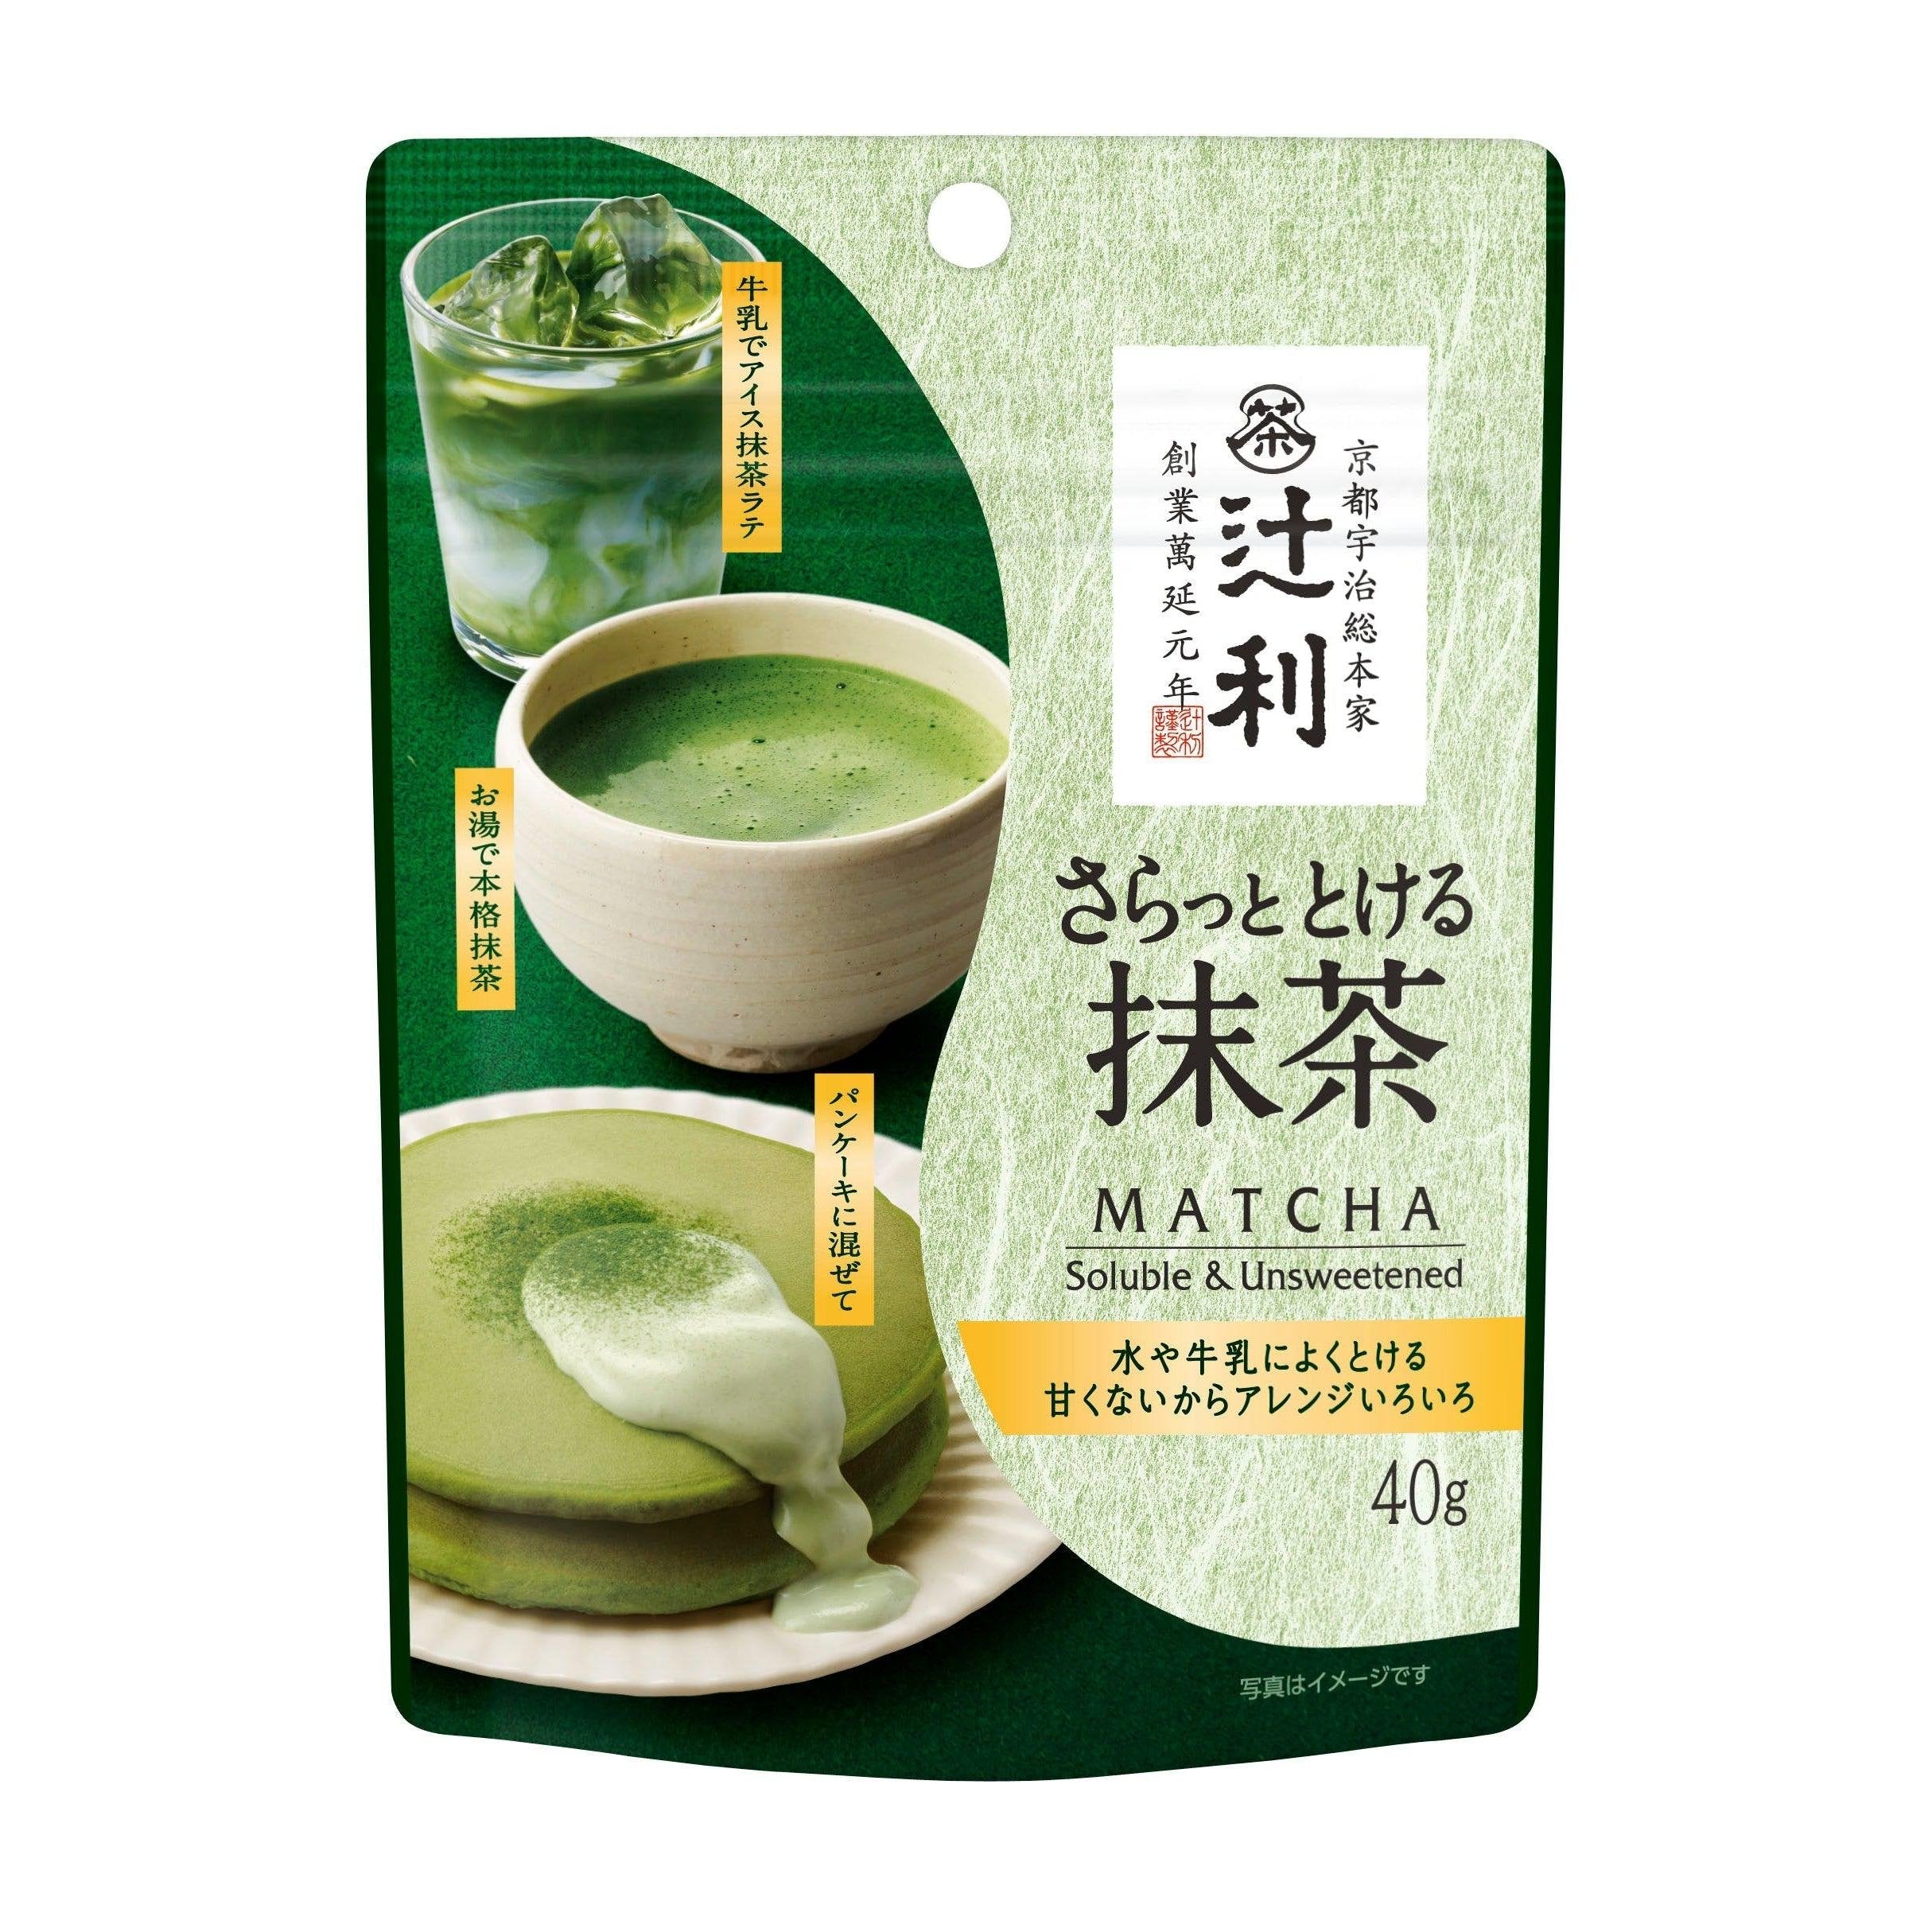 Tsujiri Soluble Unsweetened Matcha Green Tea Powder 40g